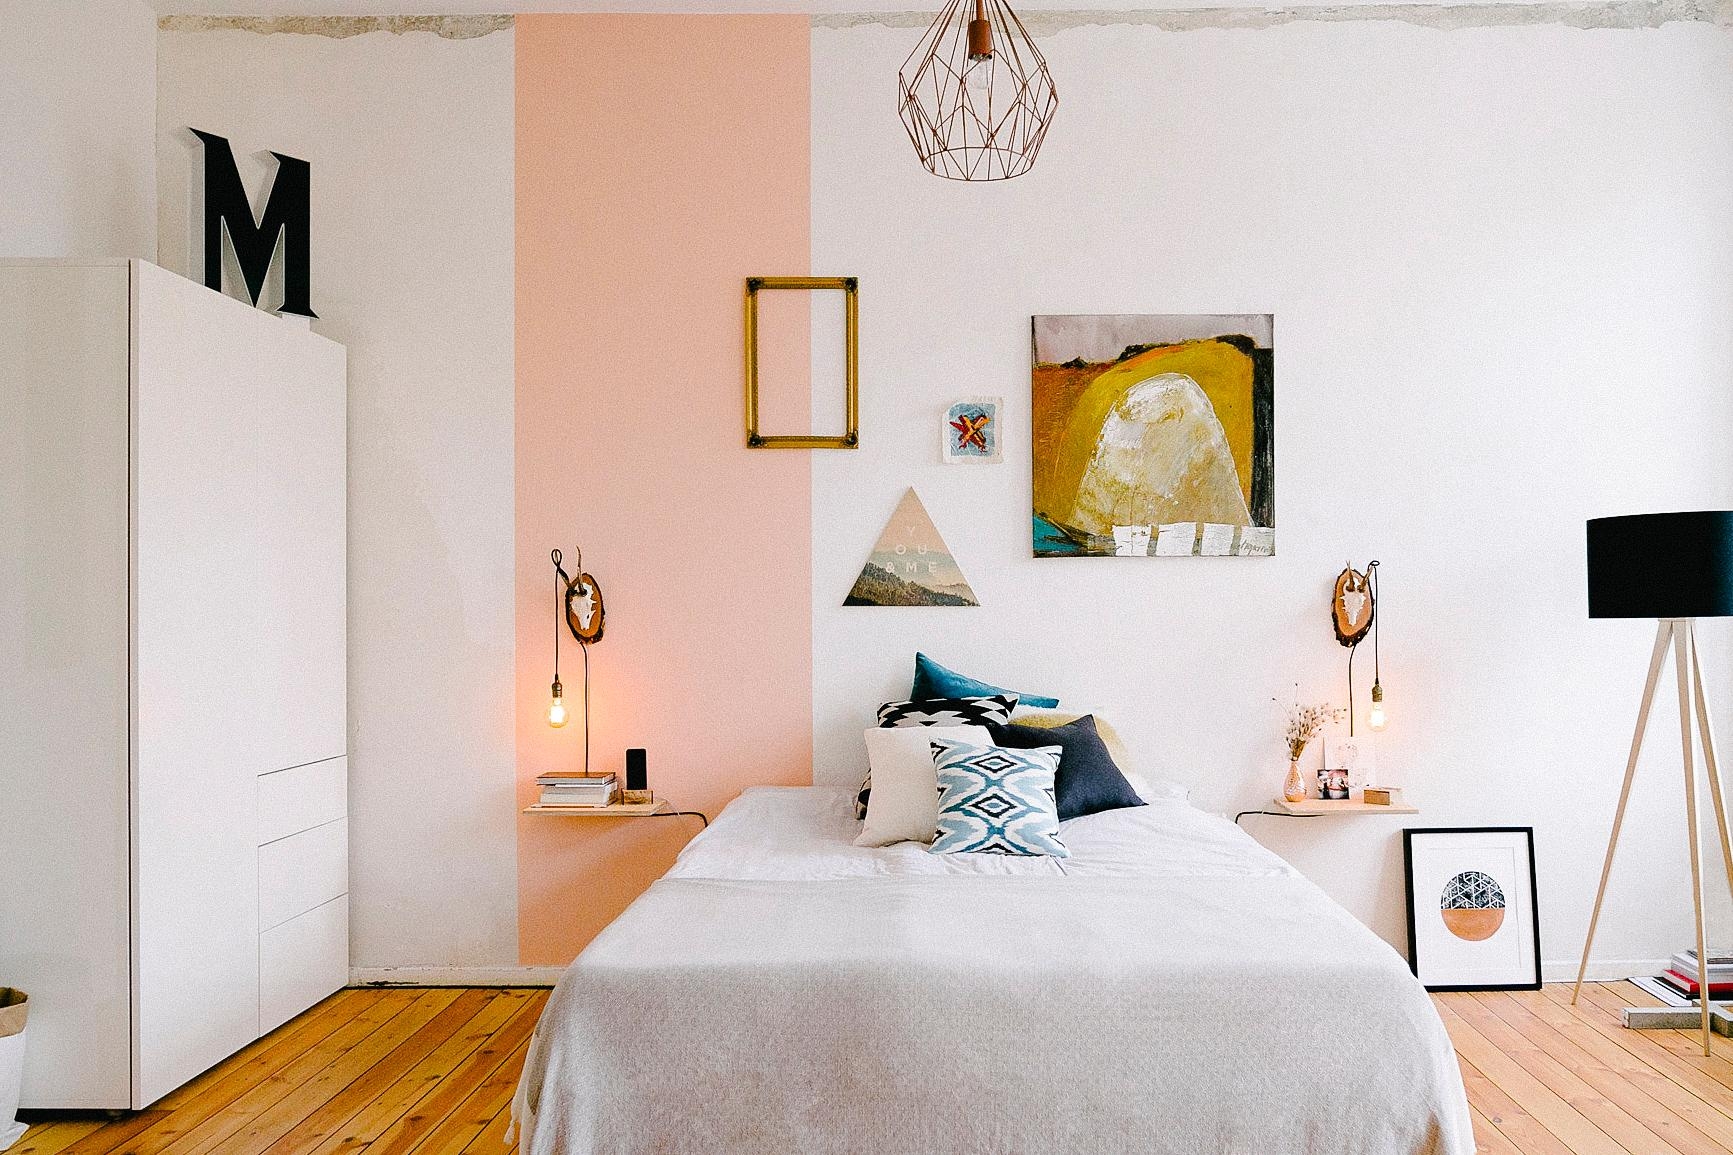 #schlafzimmer #interiordesign #bedroom #artwall